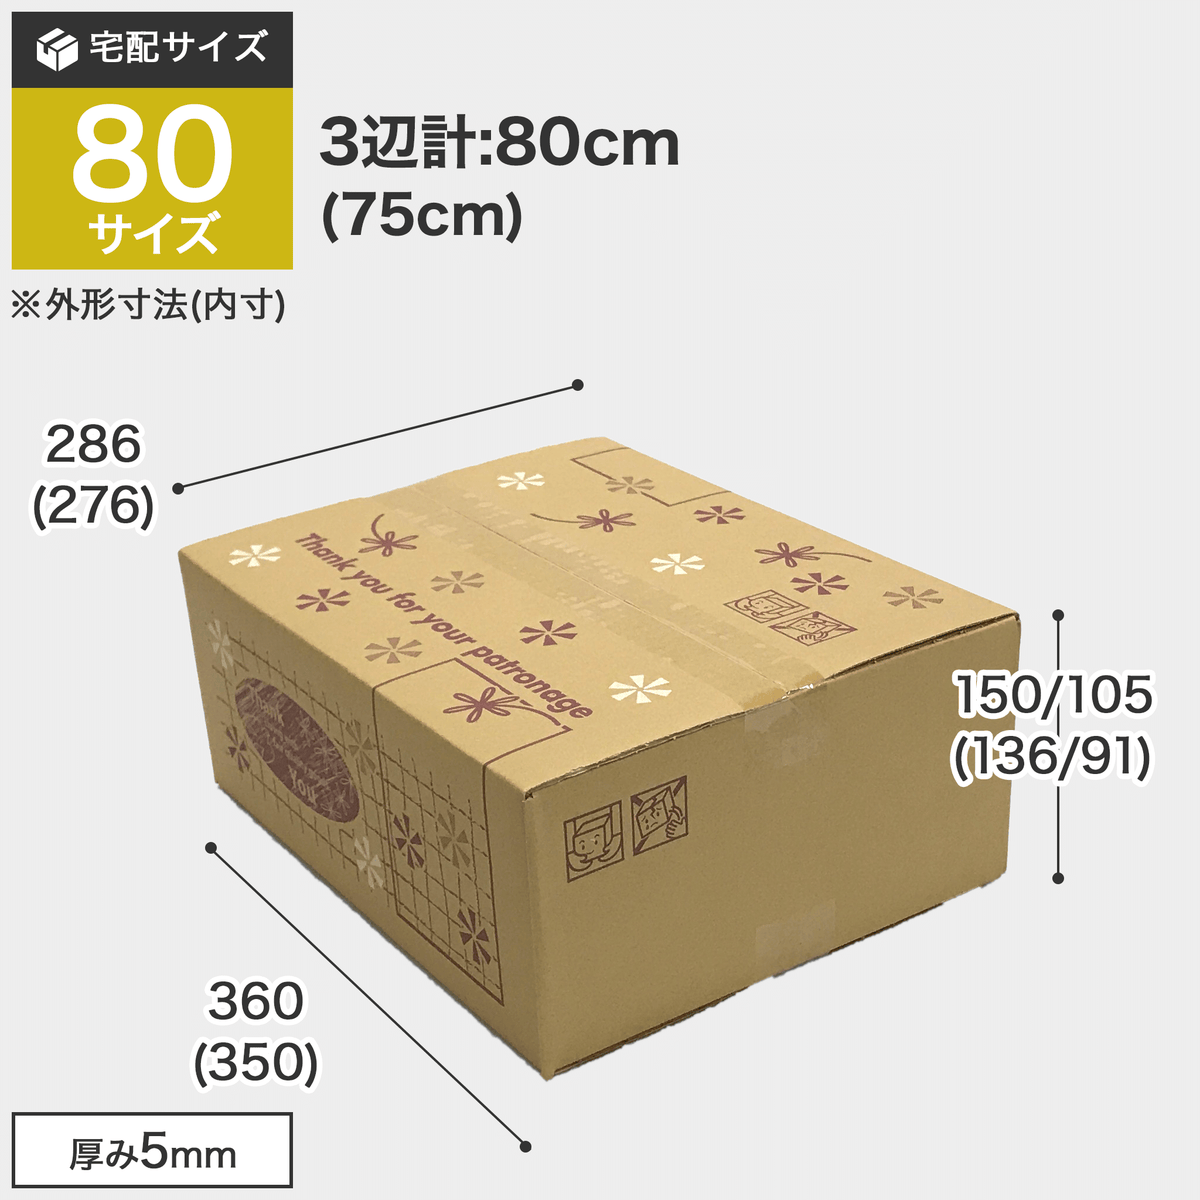 BOX-006【送料込】ダンボール箱 80サイズ T-1 【高さ調整箱】